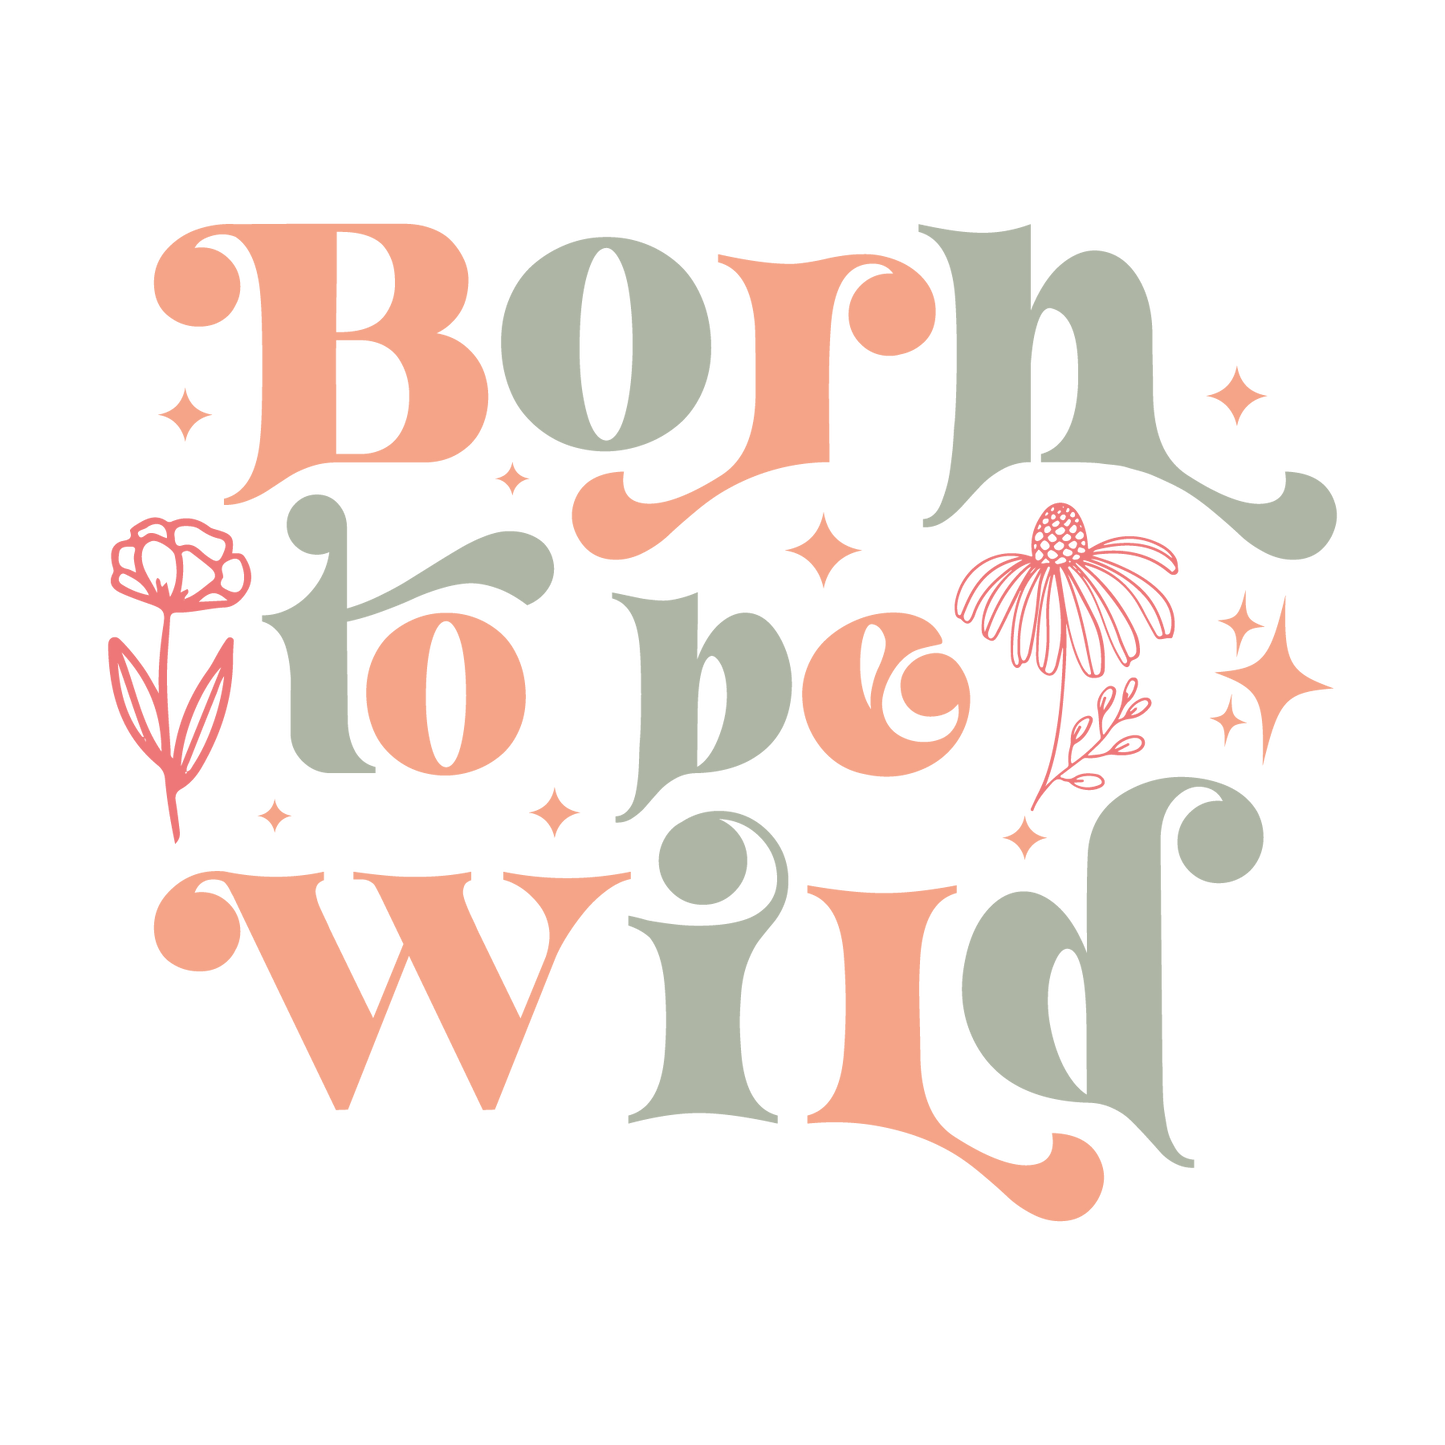 BORN TO BE WILD